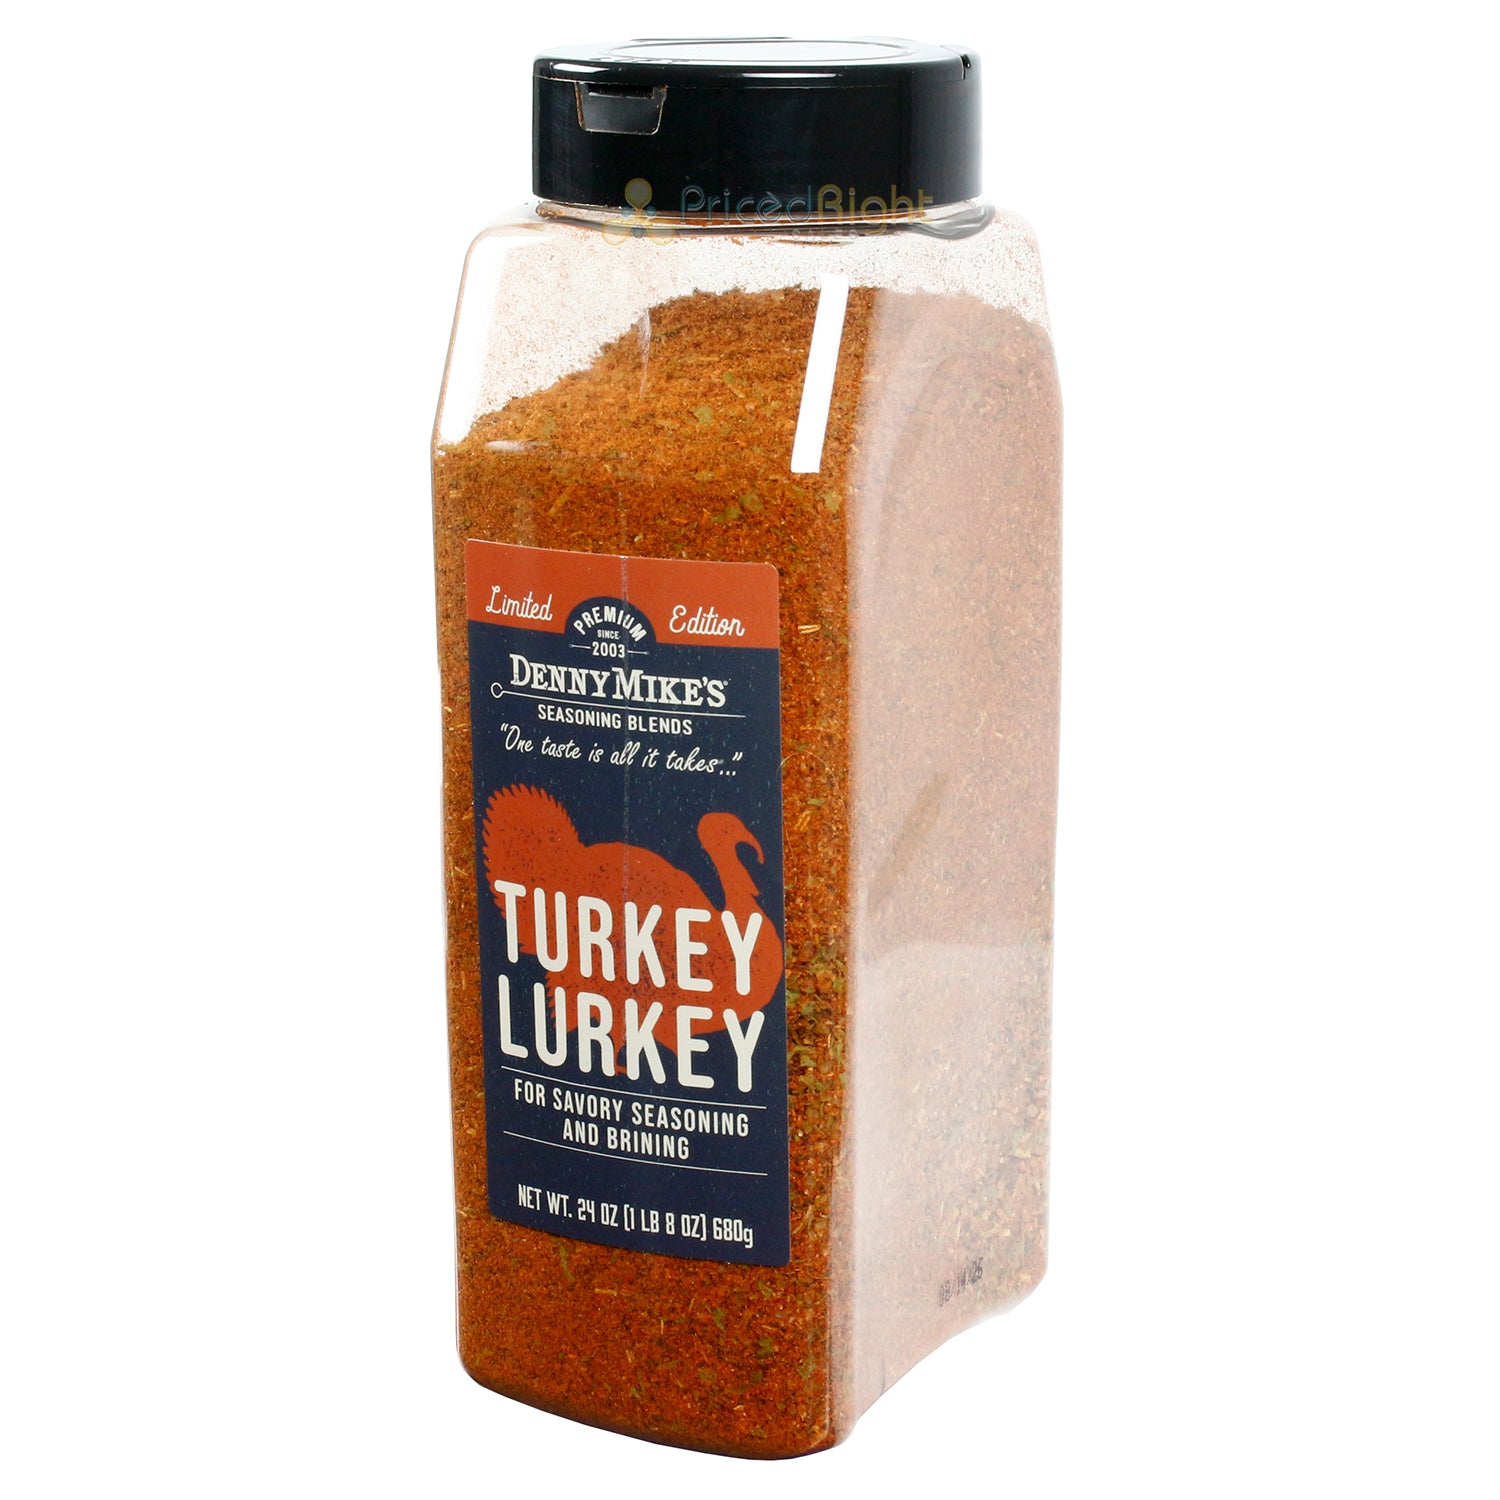 Denny Mikes Limited Edition Turkey Lurkey Rub Gluten Free MSG Free Keto 24 Oz